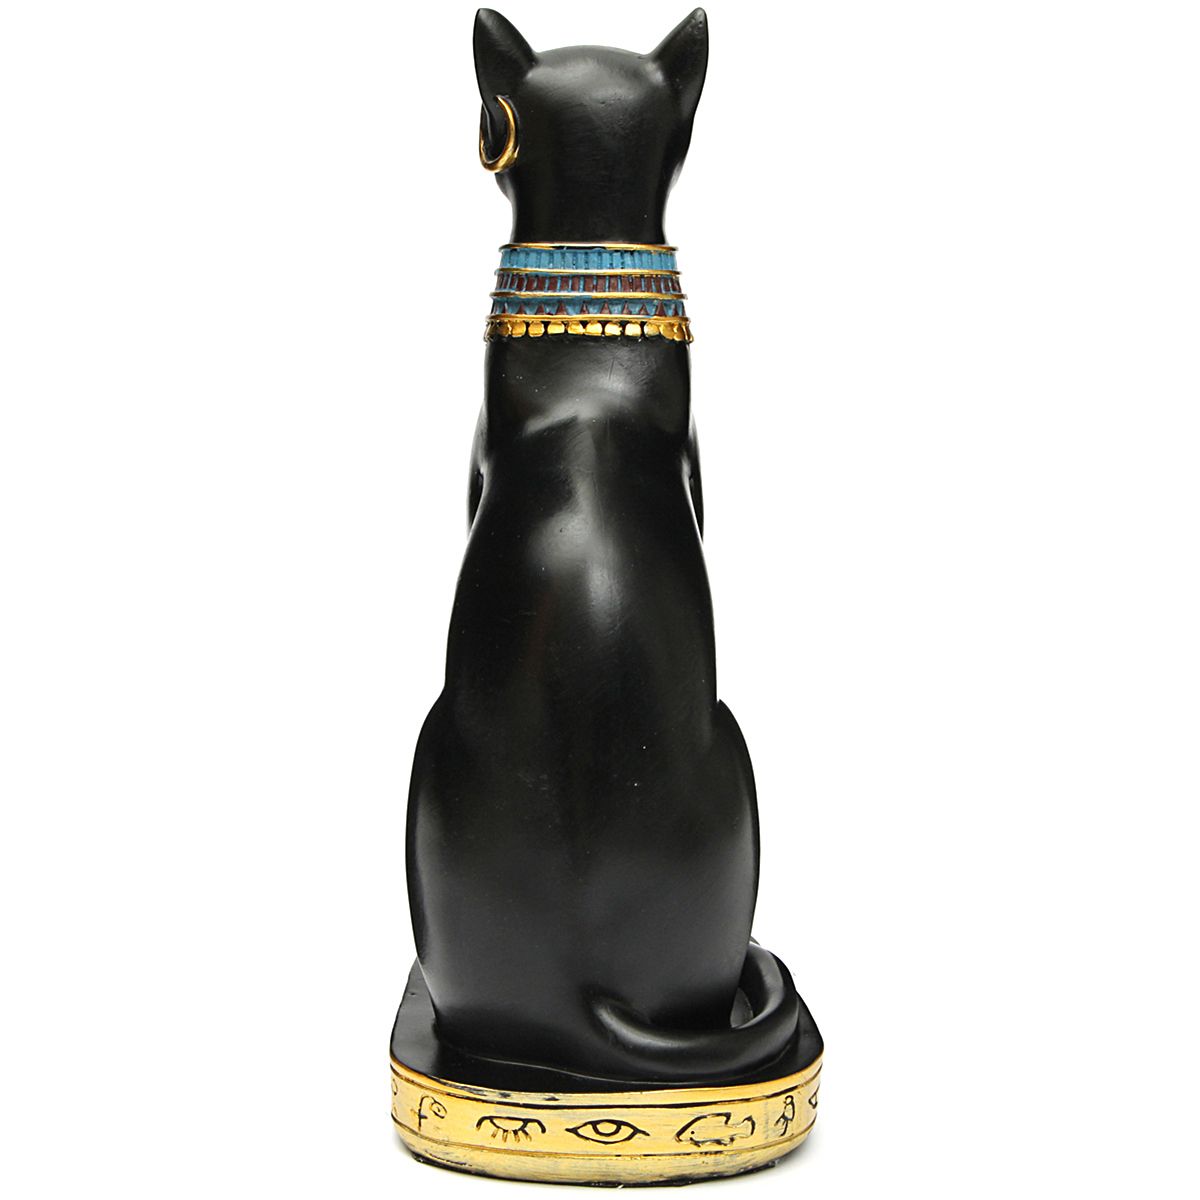 96inch-Resin-Vintage-Egyptian-Bastet-Goddess-Figurine-Black-Cat-Pharaoh-Statue-Epoxy-1304890